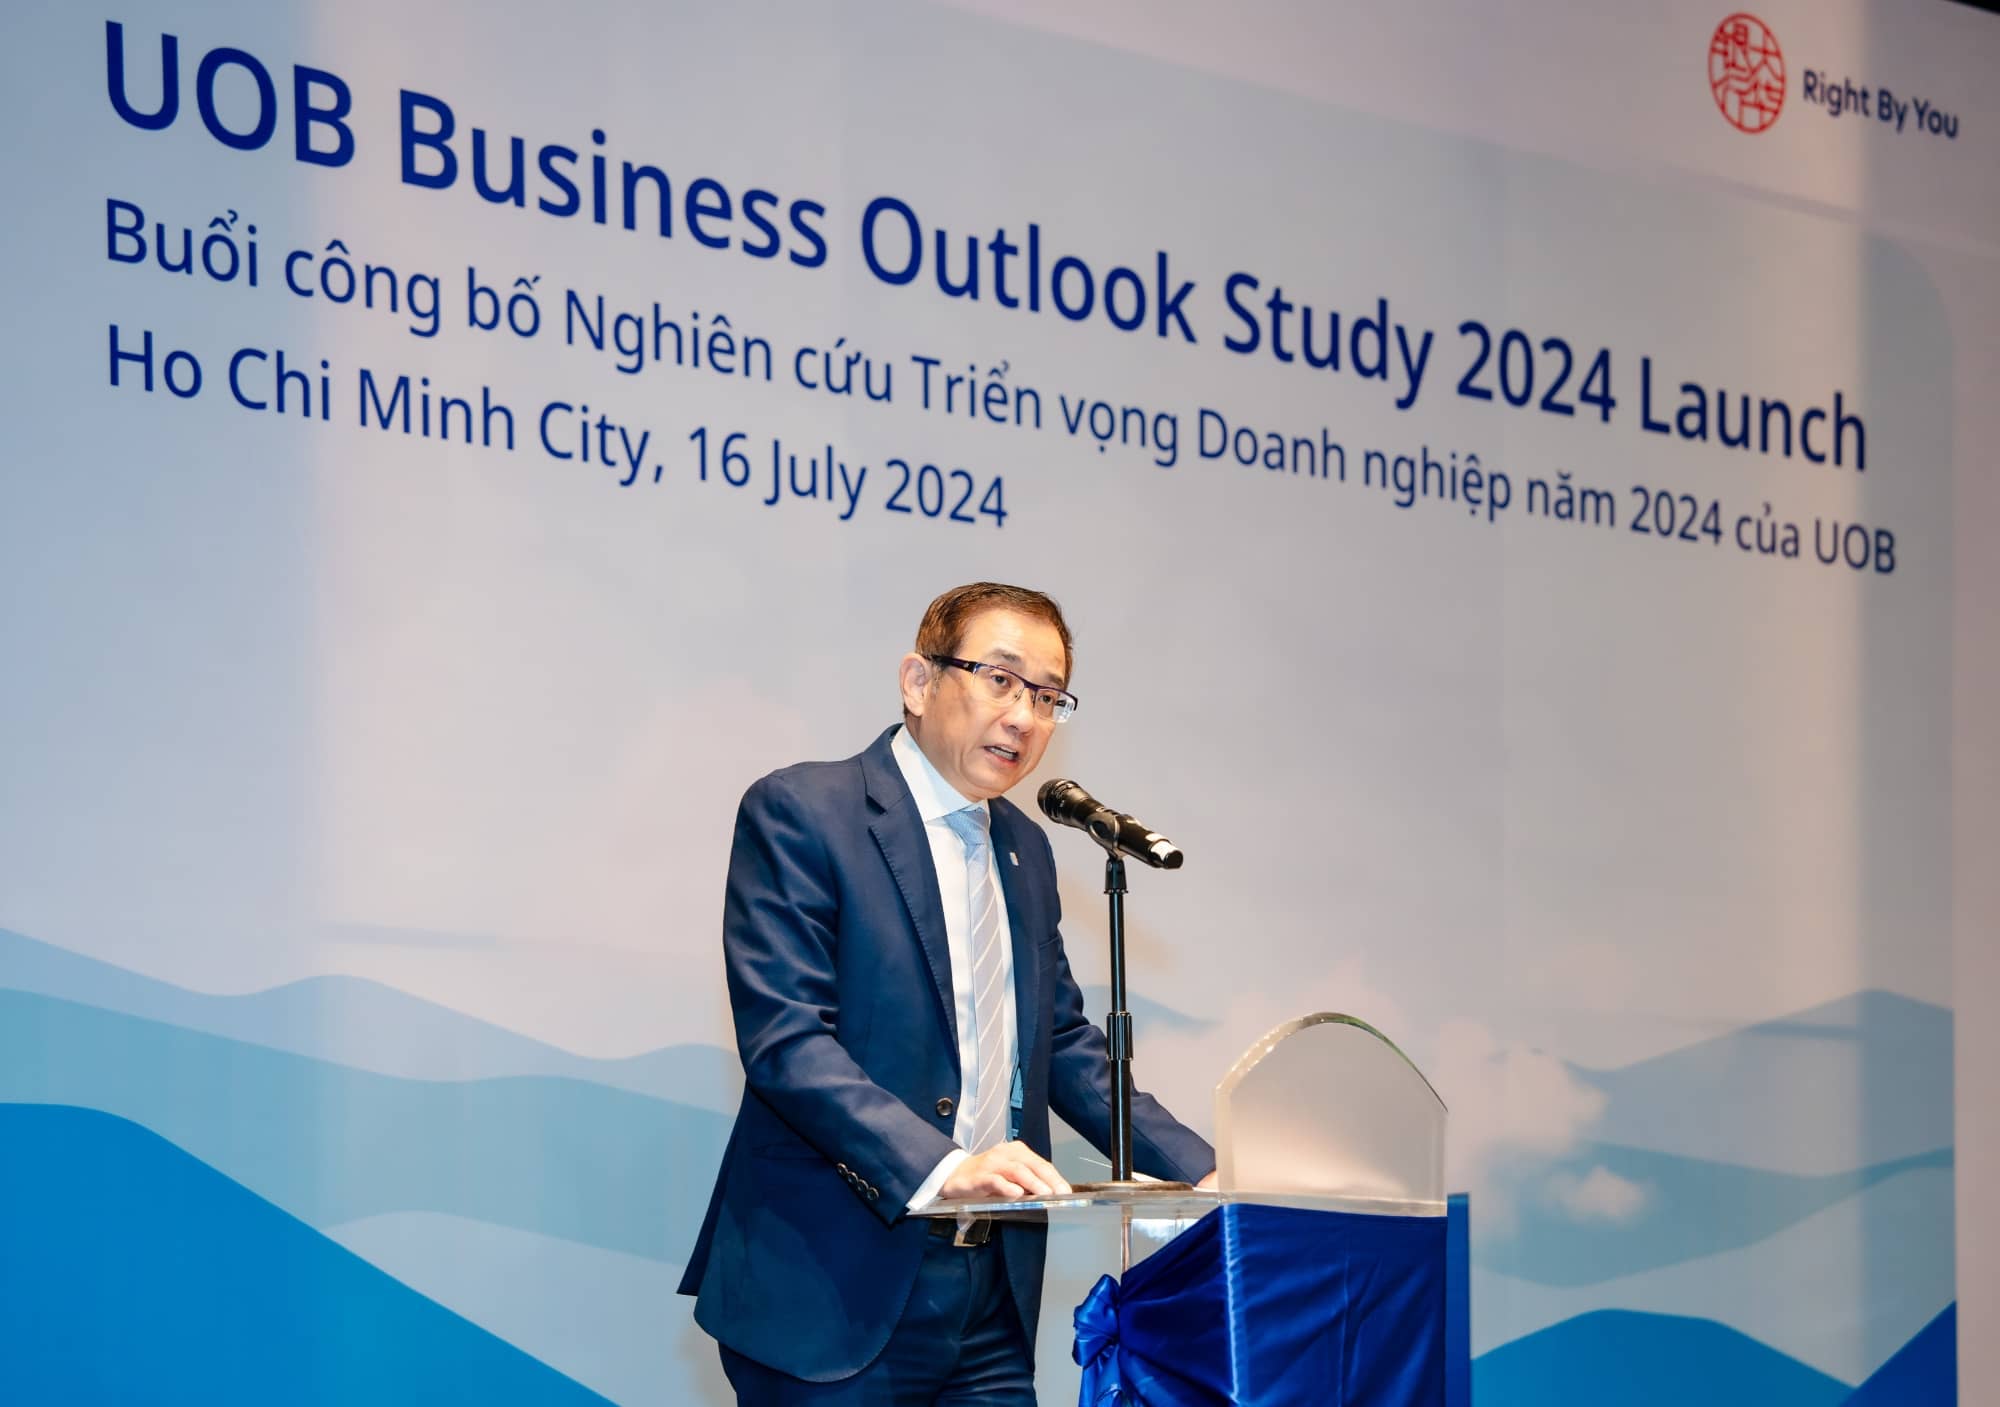 UOB Business Outlook Study 2024 Launch